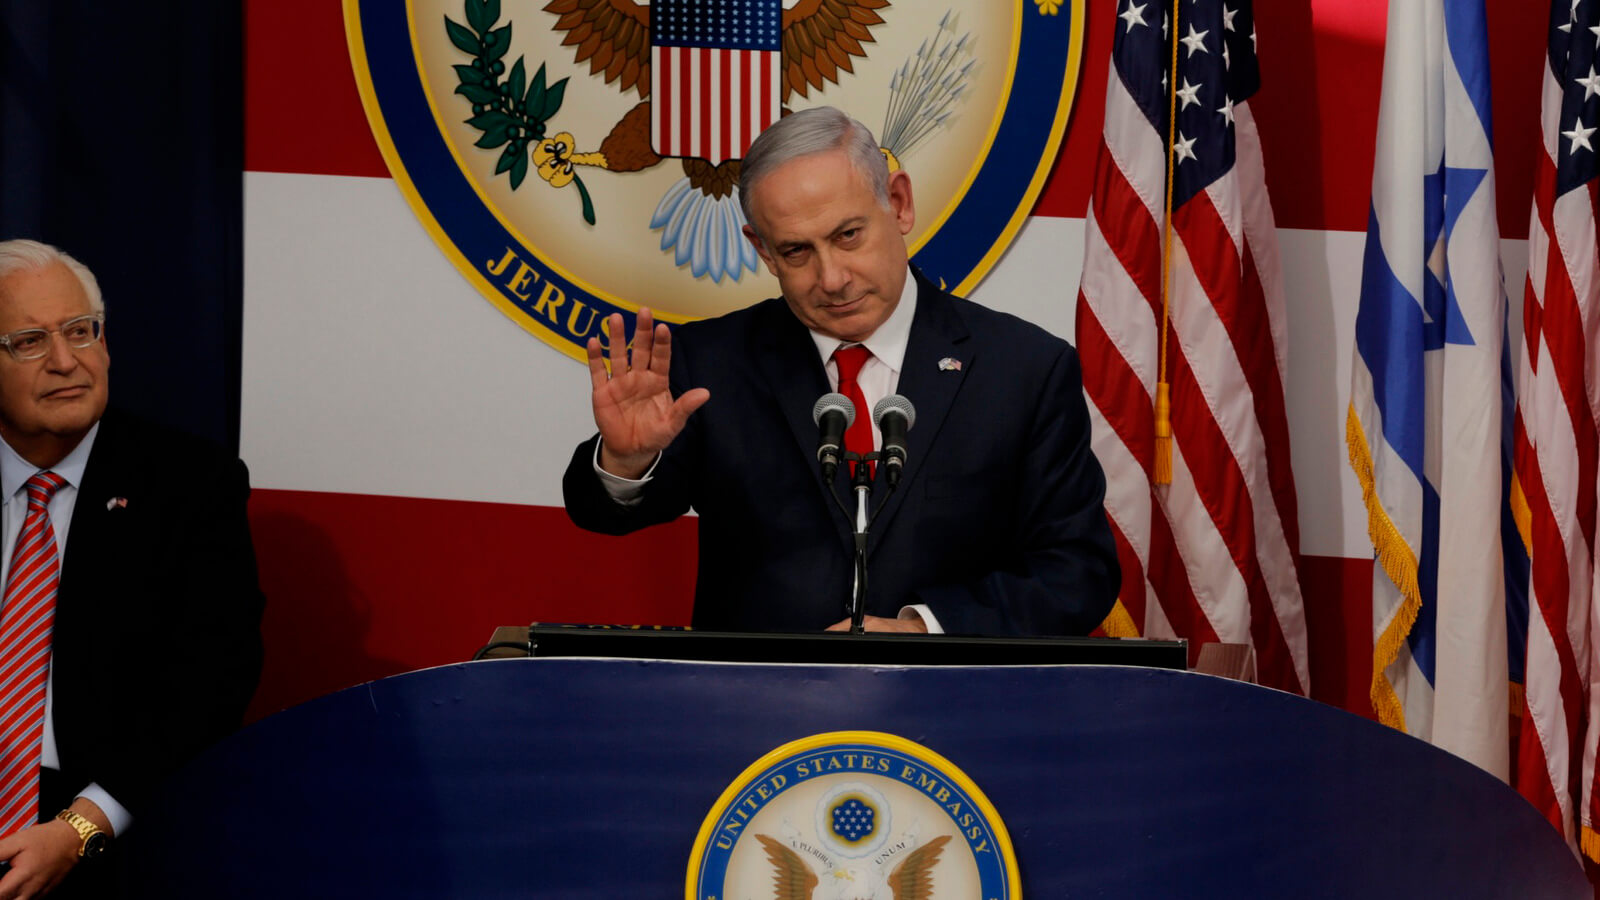 Israel's Prime Minister Benjamin Netanyahu delivers his speech as U.S. ambassador to Israel David Friedman listen, during the opening ceremony of the new U.S. embassy in Jerusalem, May 14, 2018. Sebastian Scheiner | AP